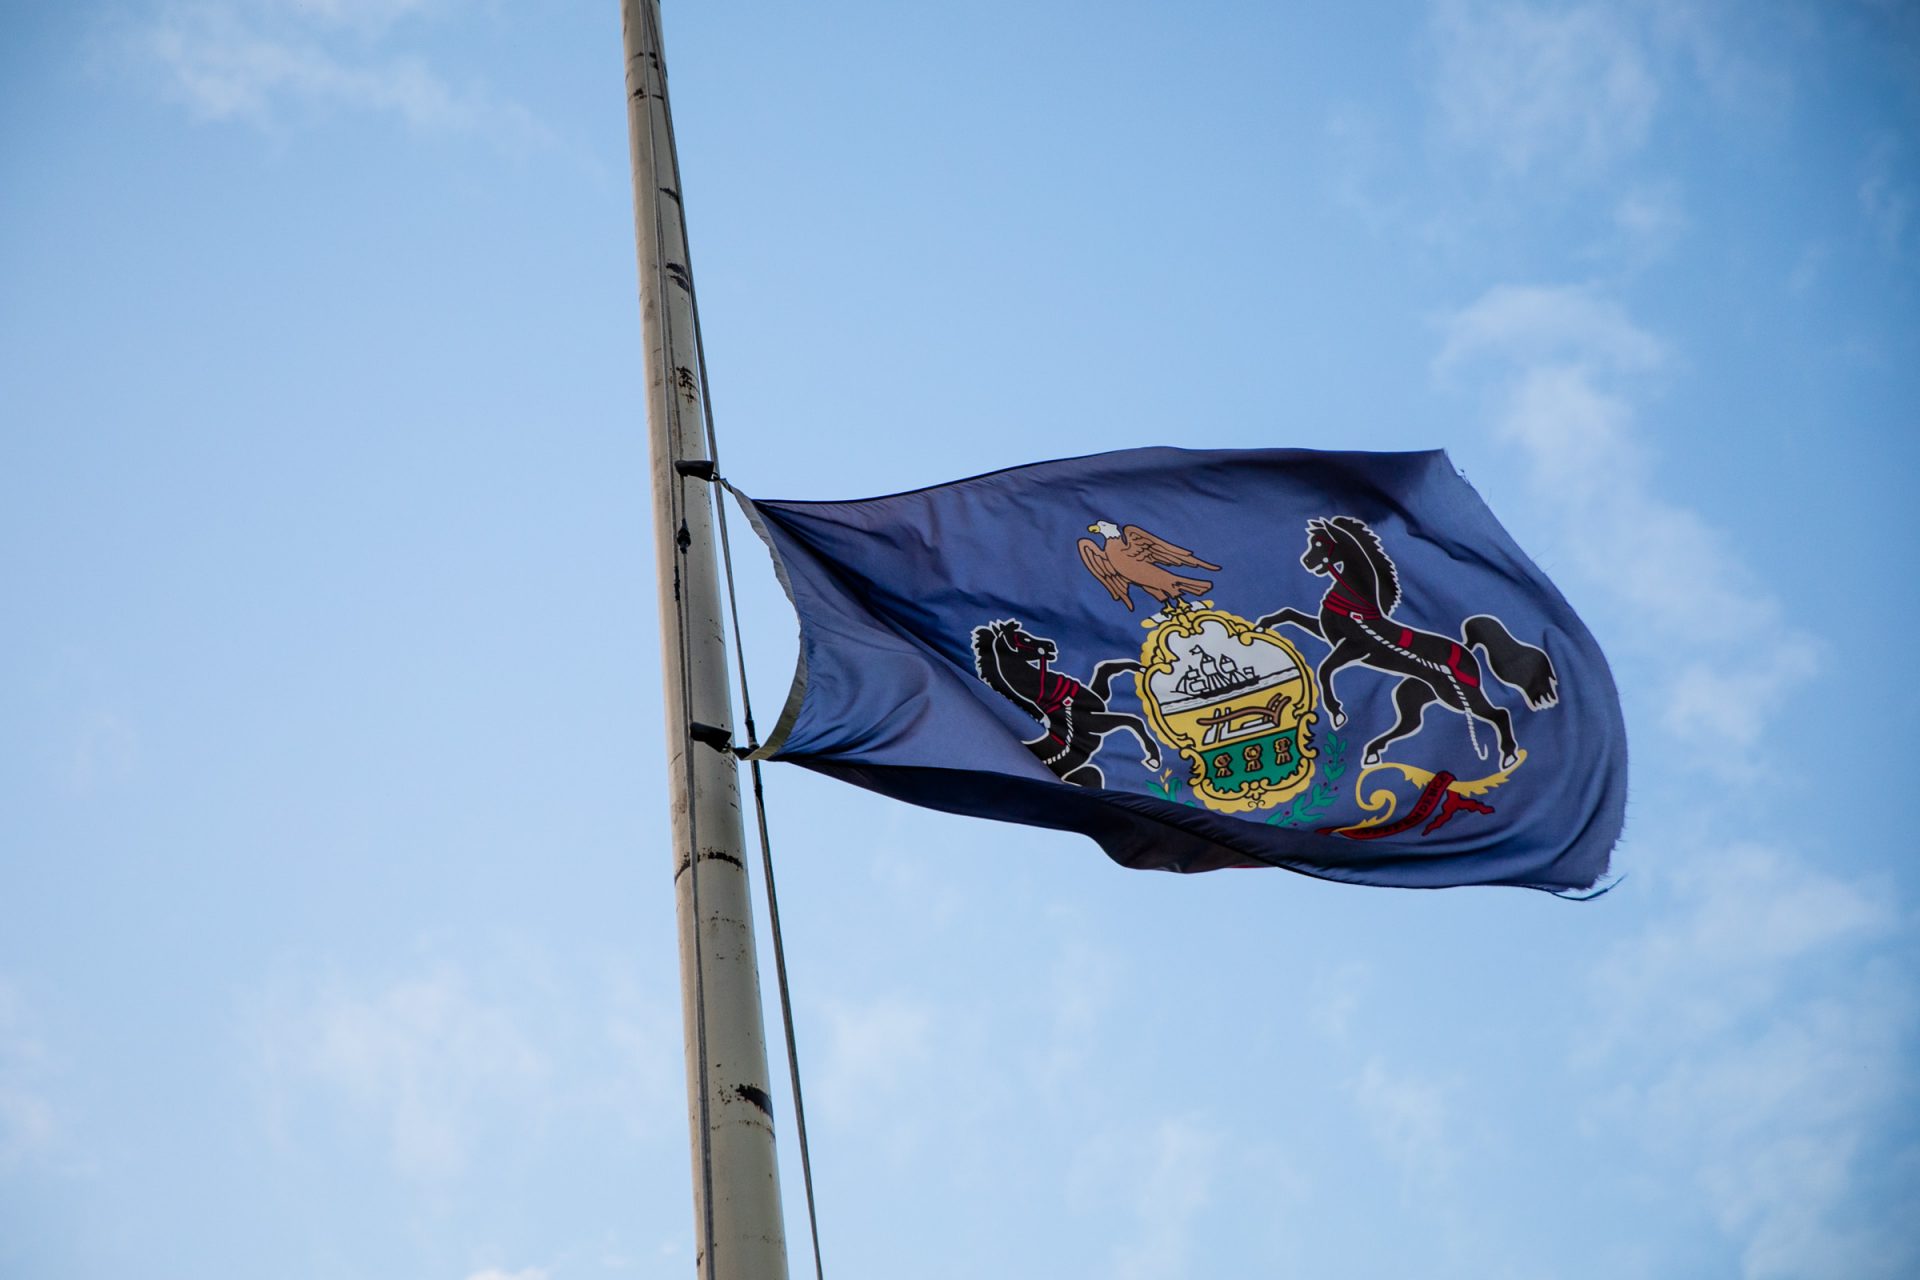 Pa. state flag at half staff